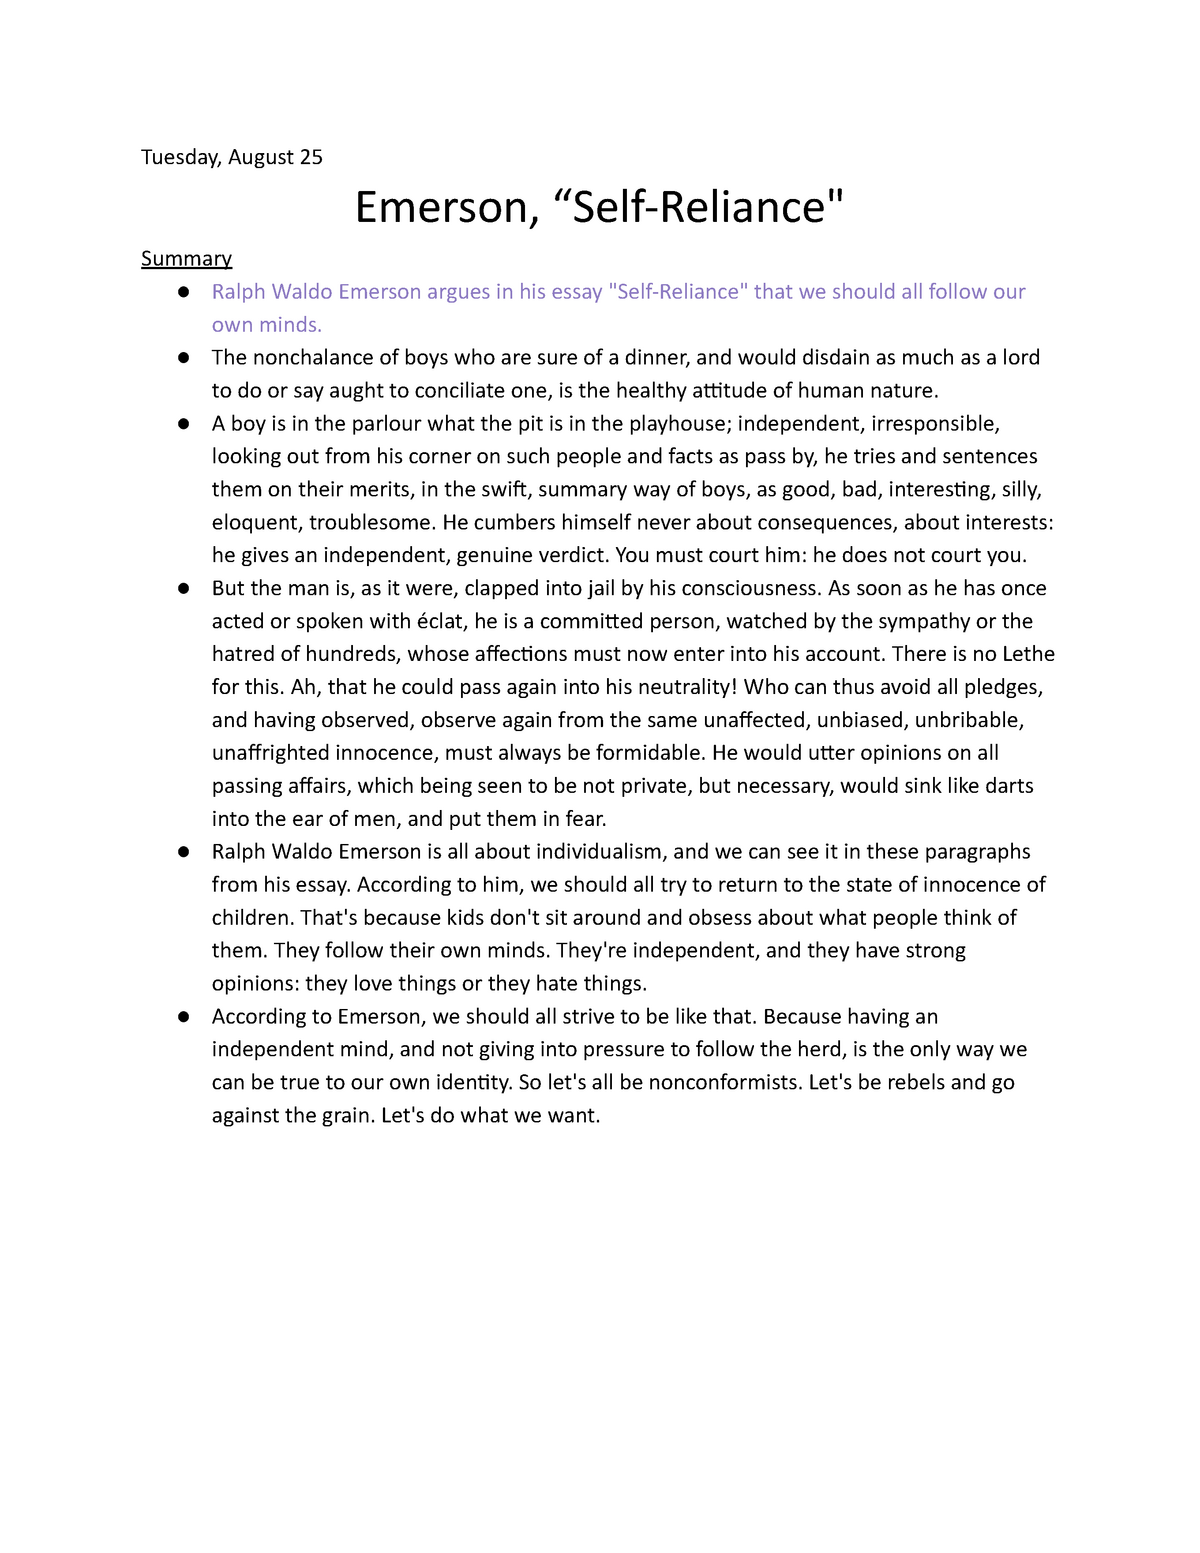 emerson self reliance essay summary